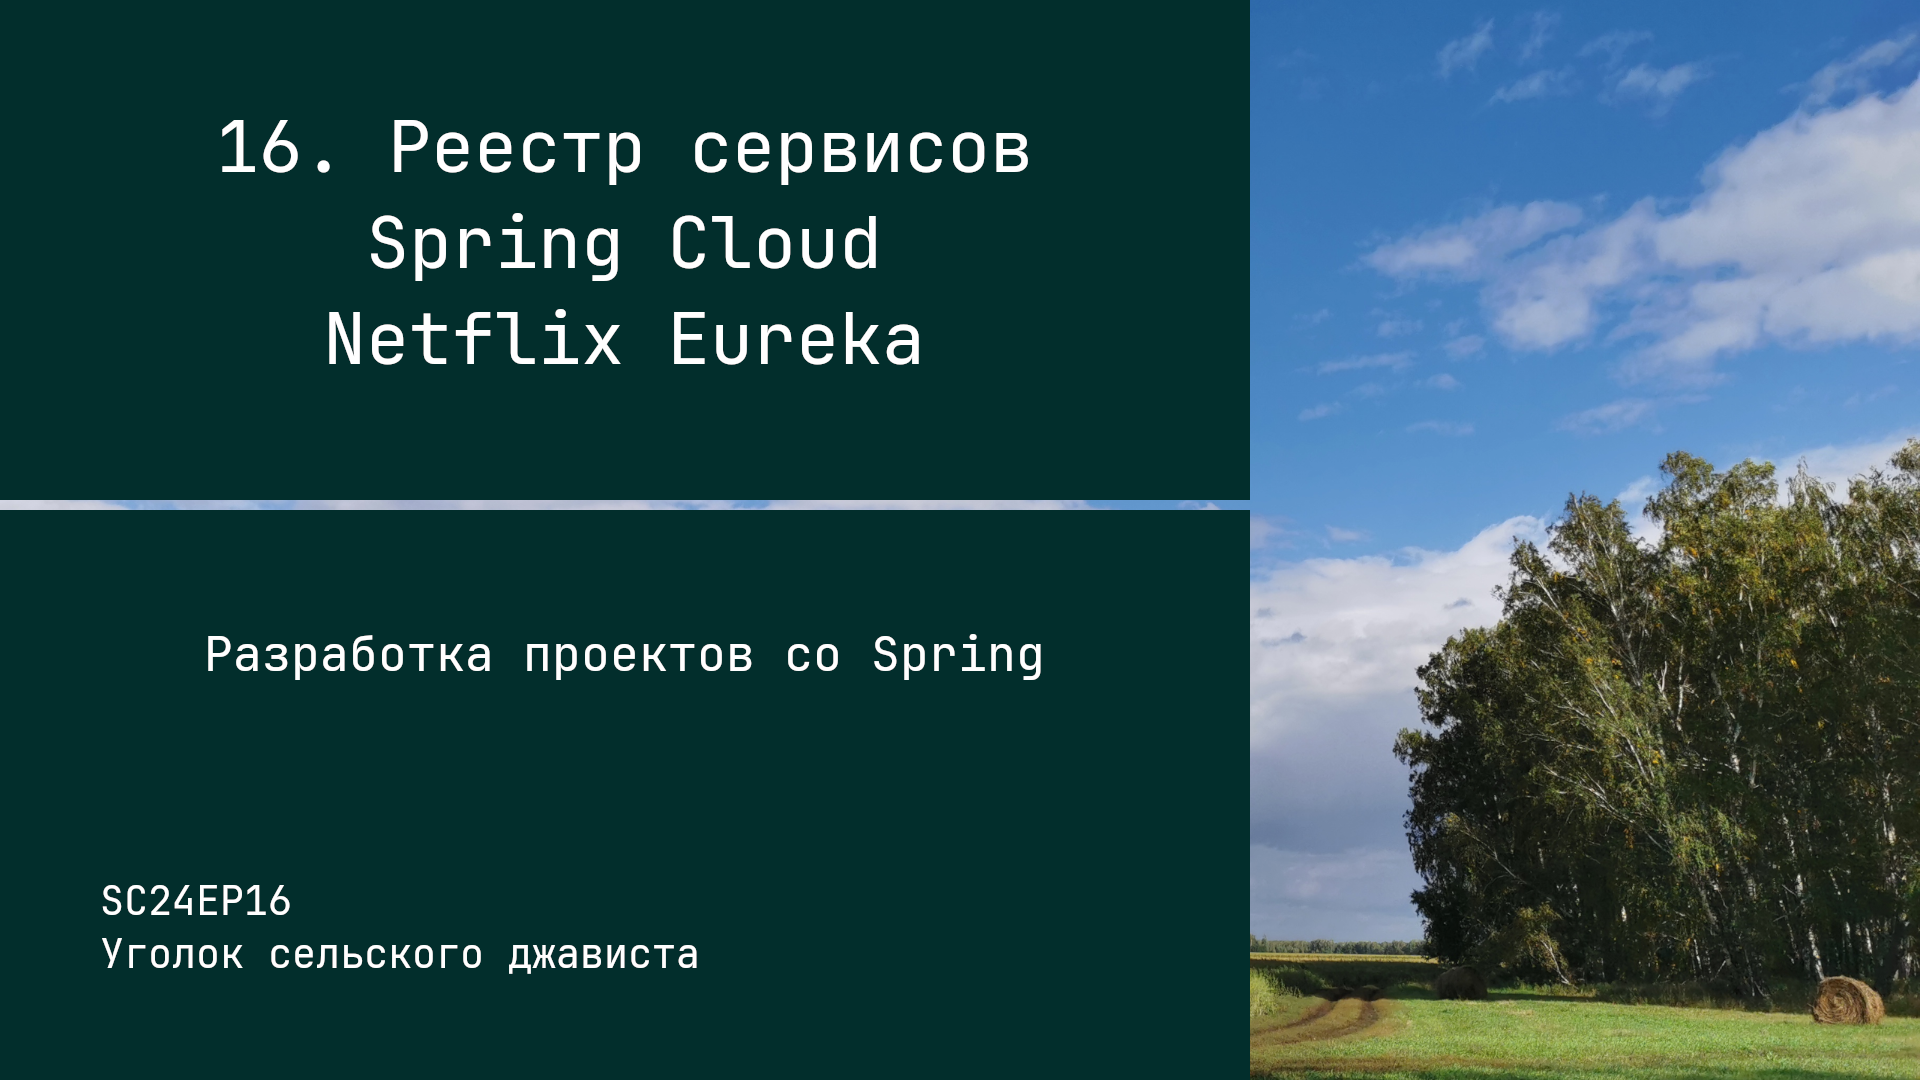 SC24EP16 Реестр сервисов Spring Cloud Netflix Eureka - Разработка проектов со Spring